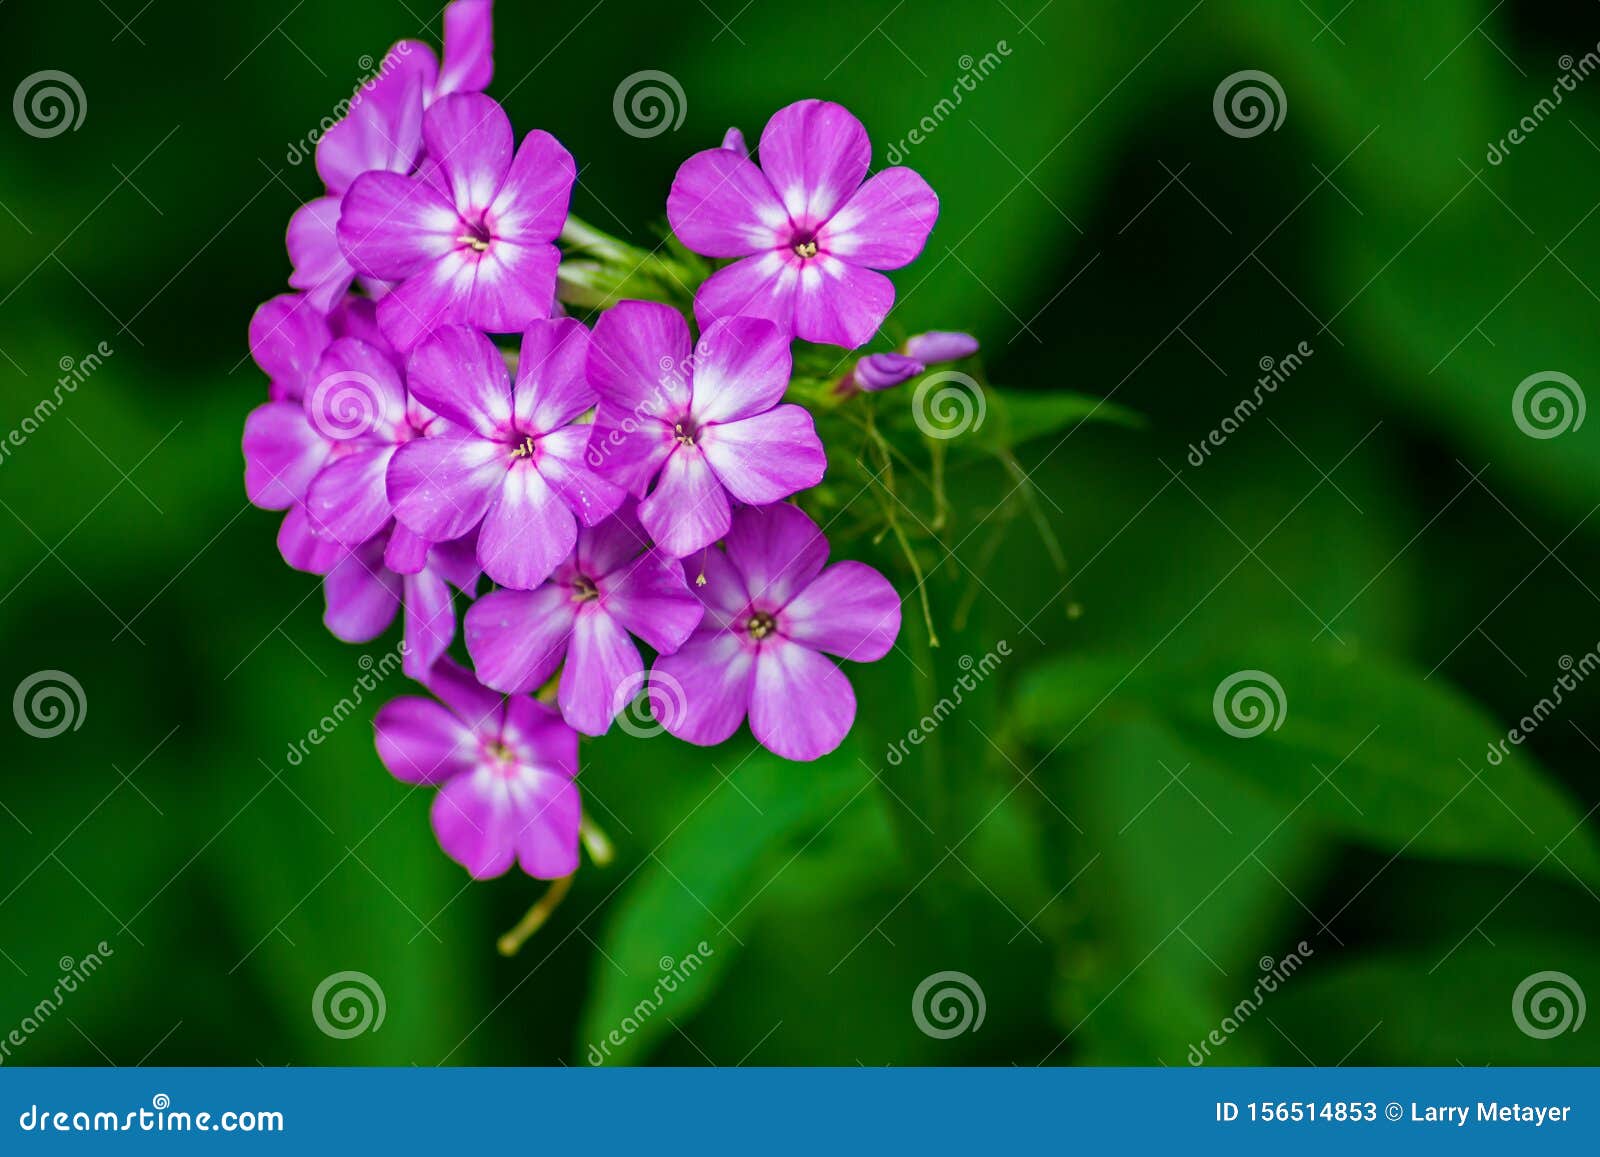 Cluster of Phlox Wildflowers, Phlox Carolina Stock Image - Image of ...